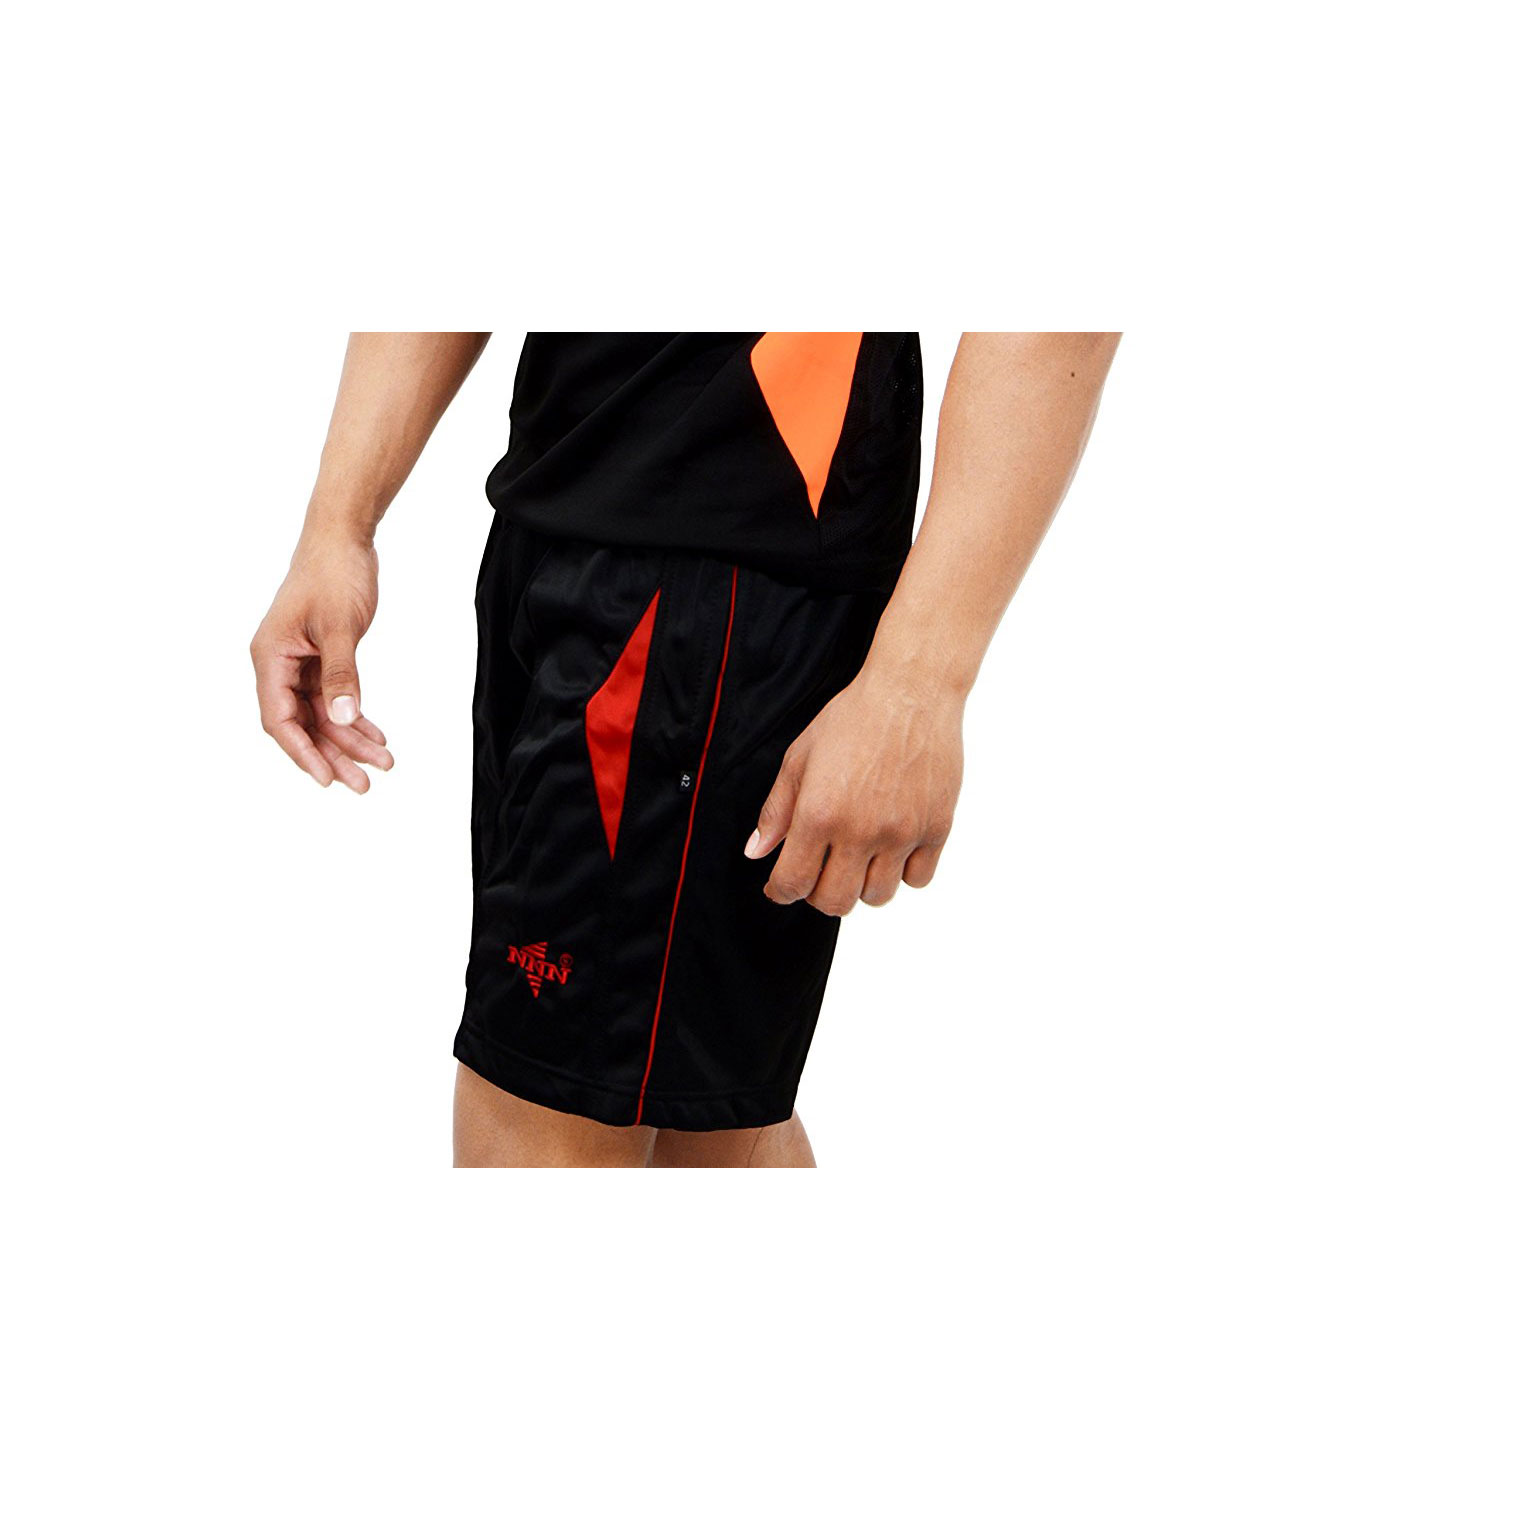   NNN Men's Polyester Sports Shorts